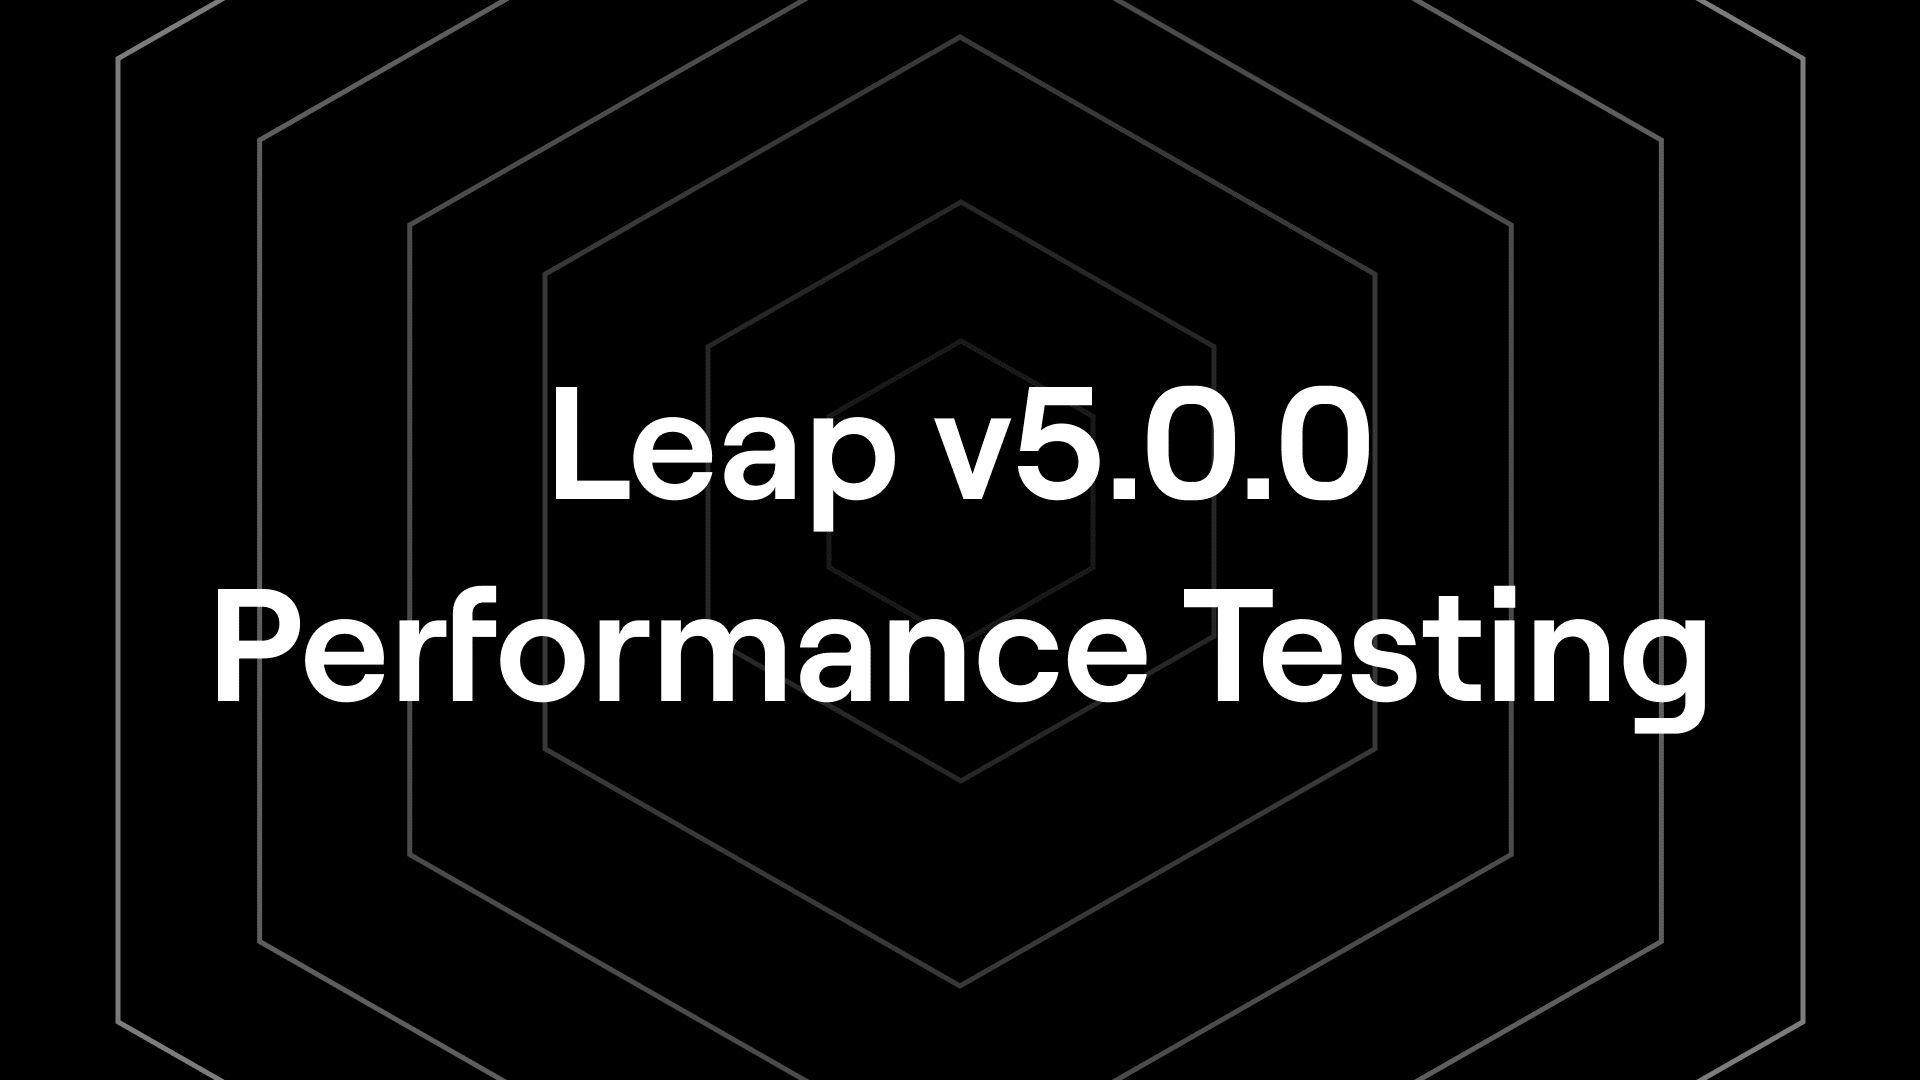 Leap v5.0.0 Performance Testing